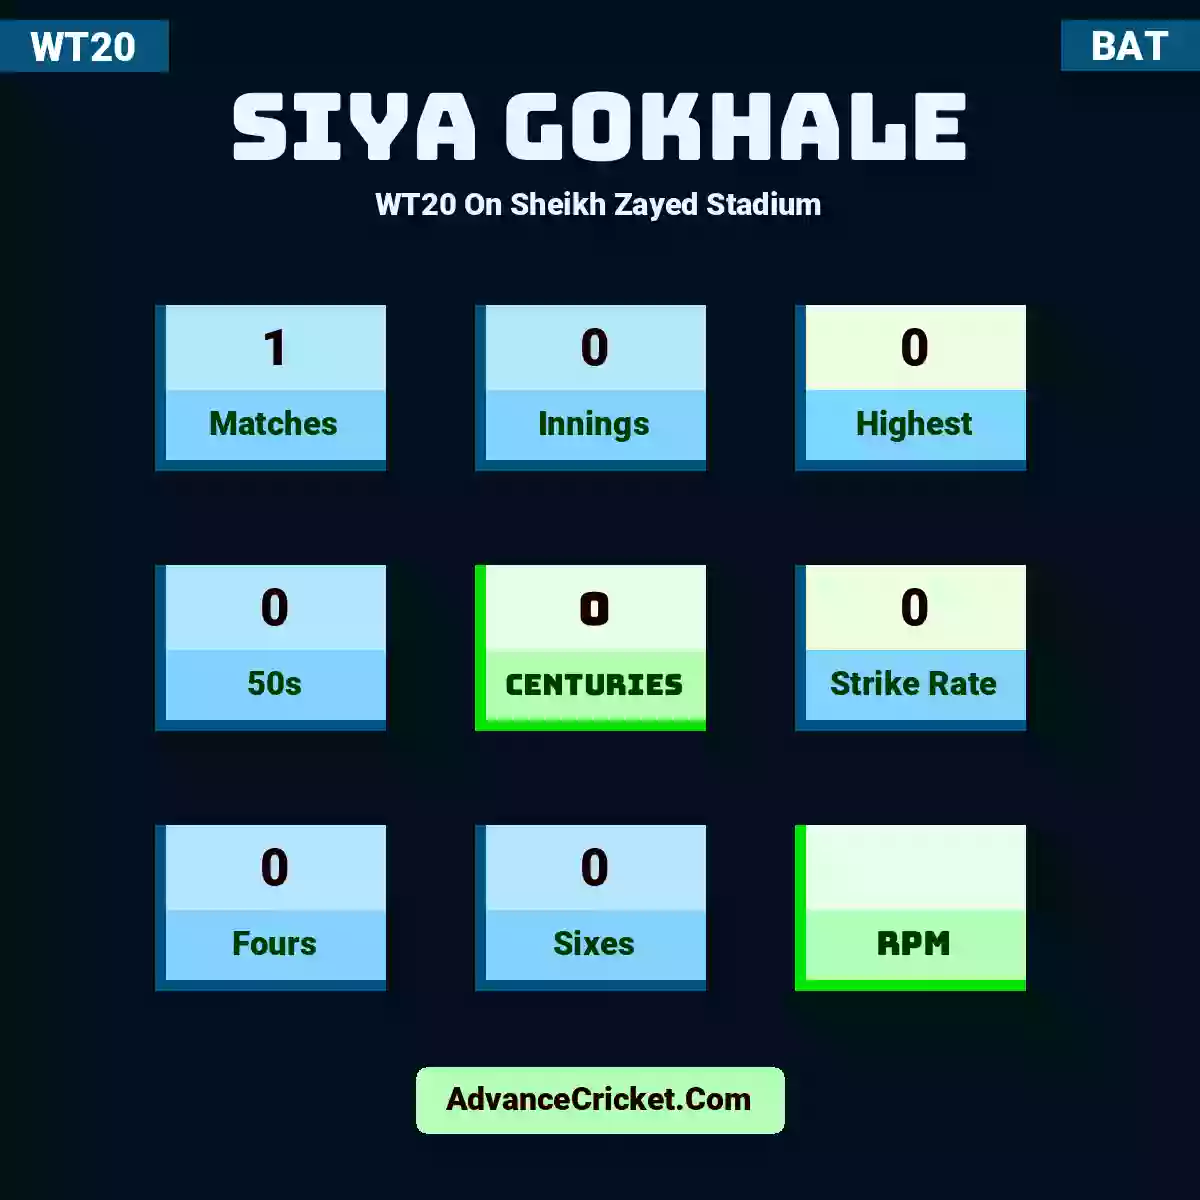 Siya Gokhale WT20  On Sheikh Zayed Stadium, Siya Gokhale played 1 matches, scored 0 runs as highest, 0 half-centuries, and 0 centuries, with a strike rate of 0. S.Gokhale hit 0 fours and 0 sixes.